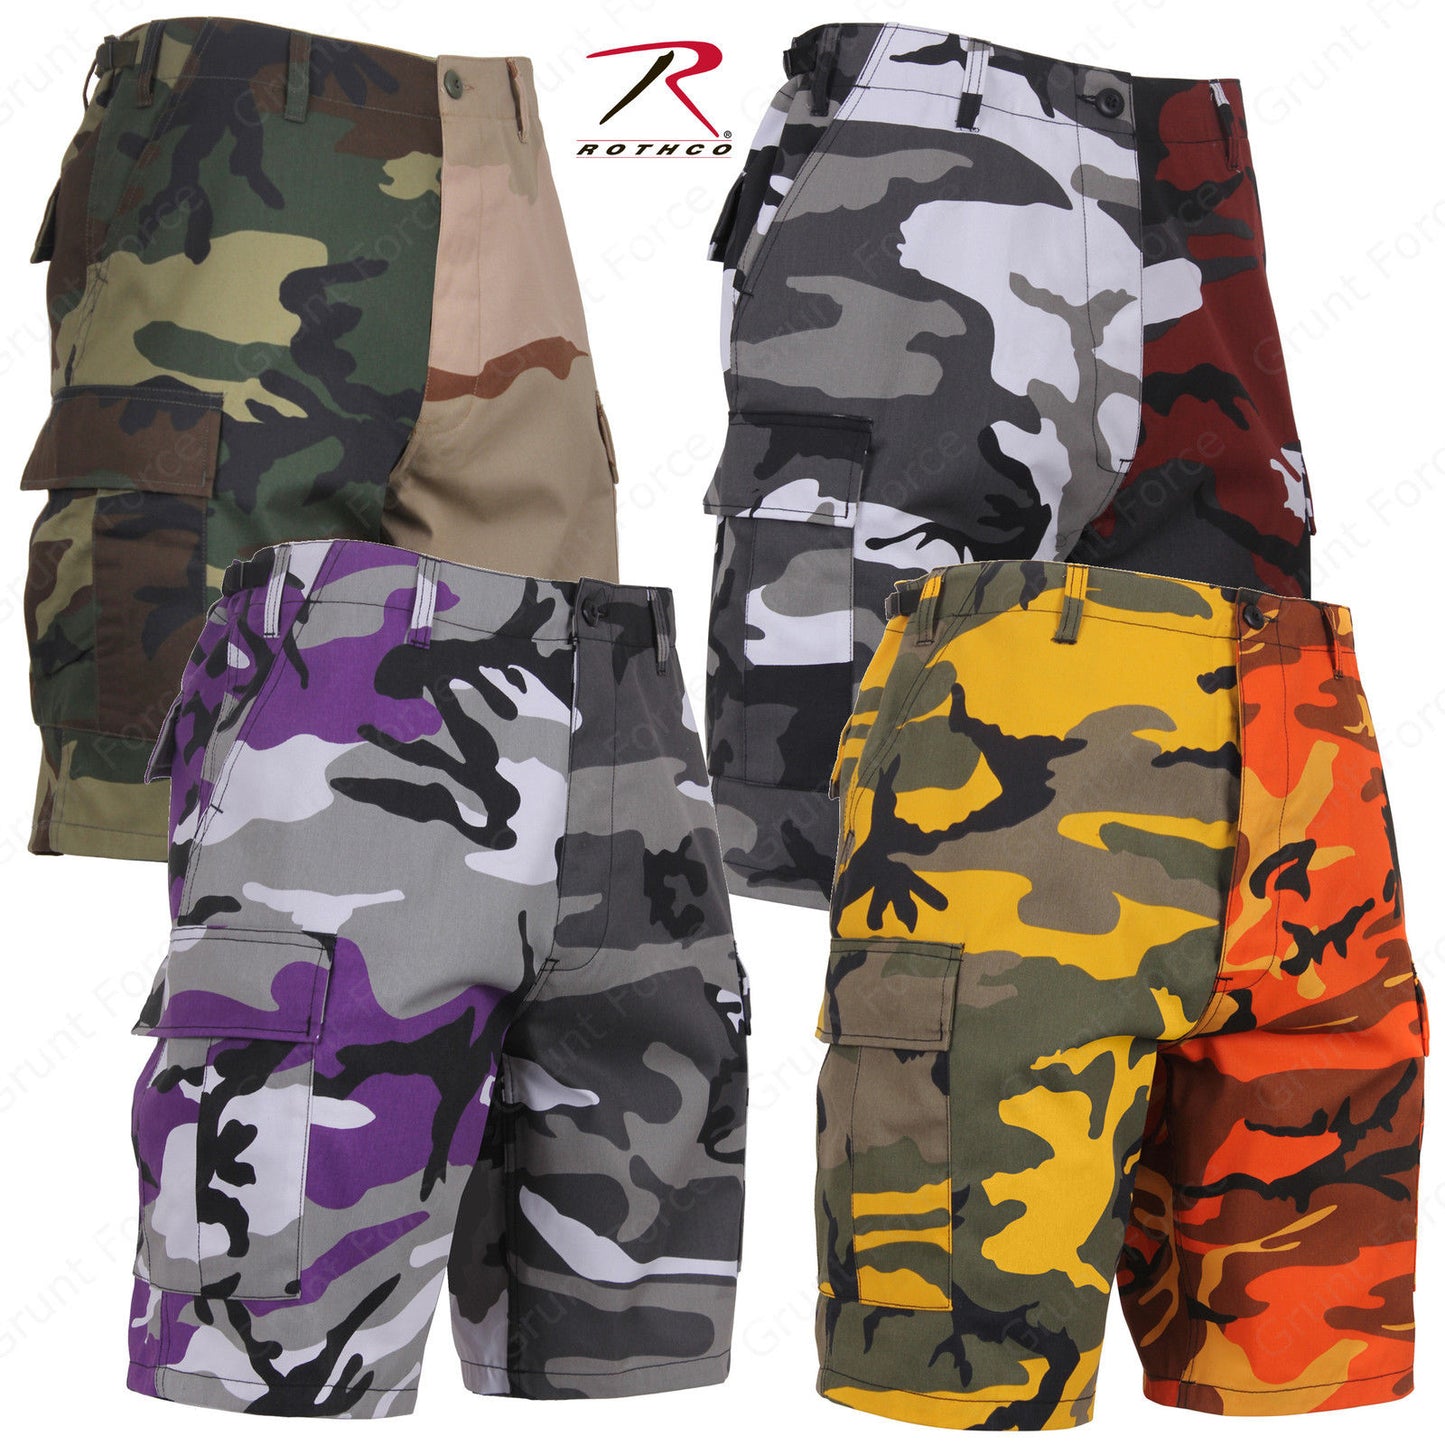 Rothco Two-Tone Camo Shorts - Tactical B.D.U. Shorts